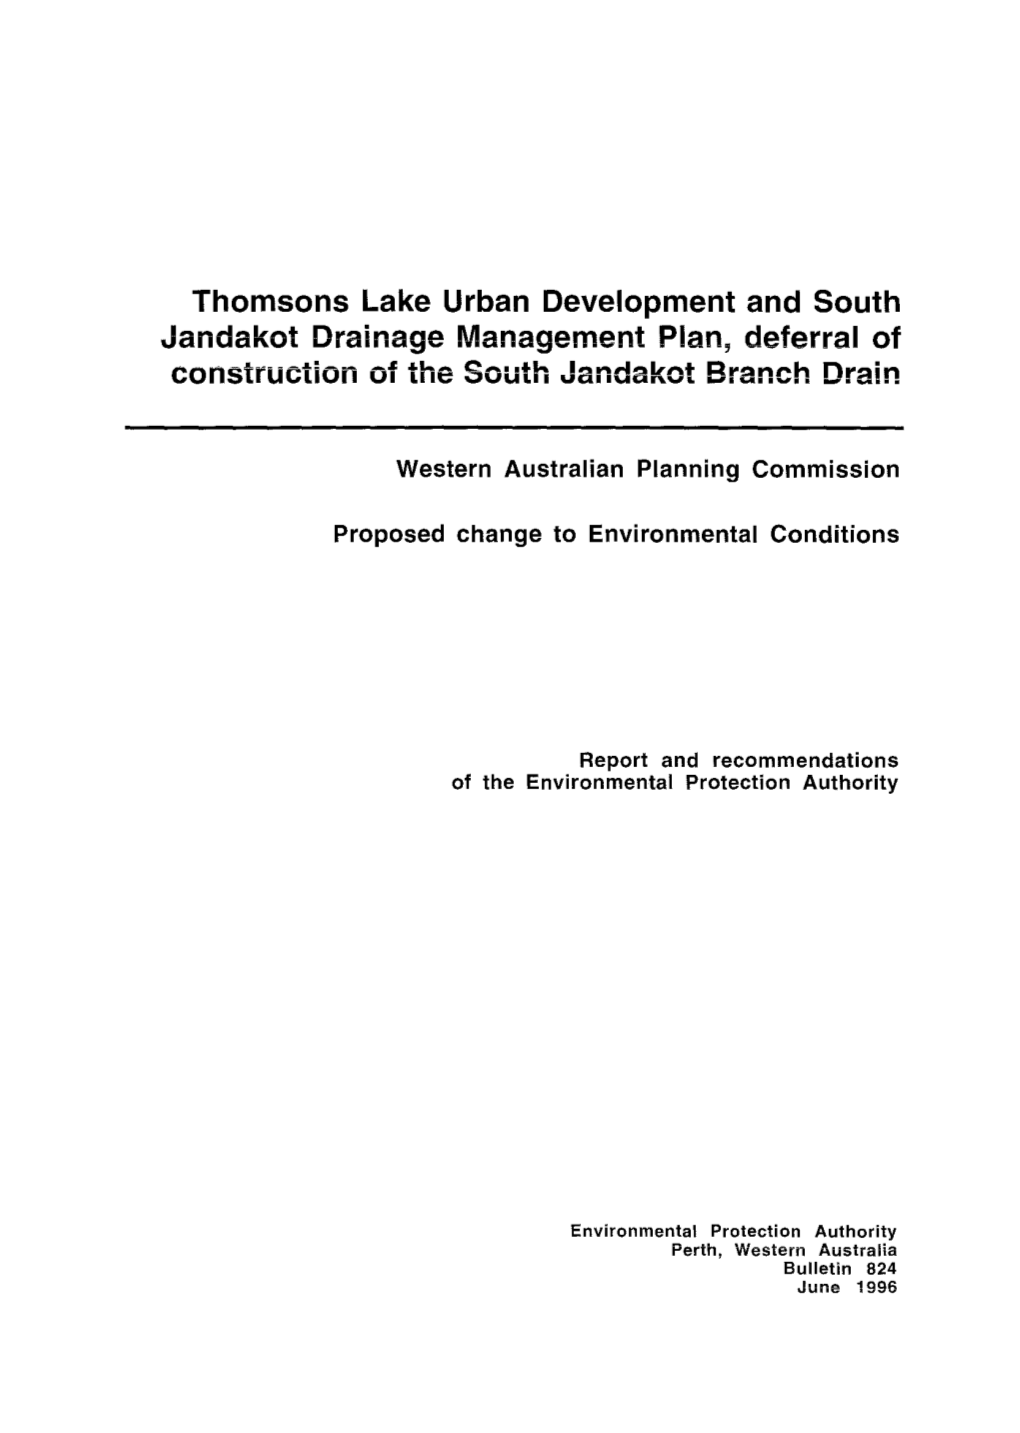 Thomsons Lake Urban Development and South Jandakot Drainage Management Plan, Deferral of Construction of the South Jandakot Branch Drain